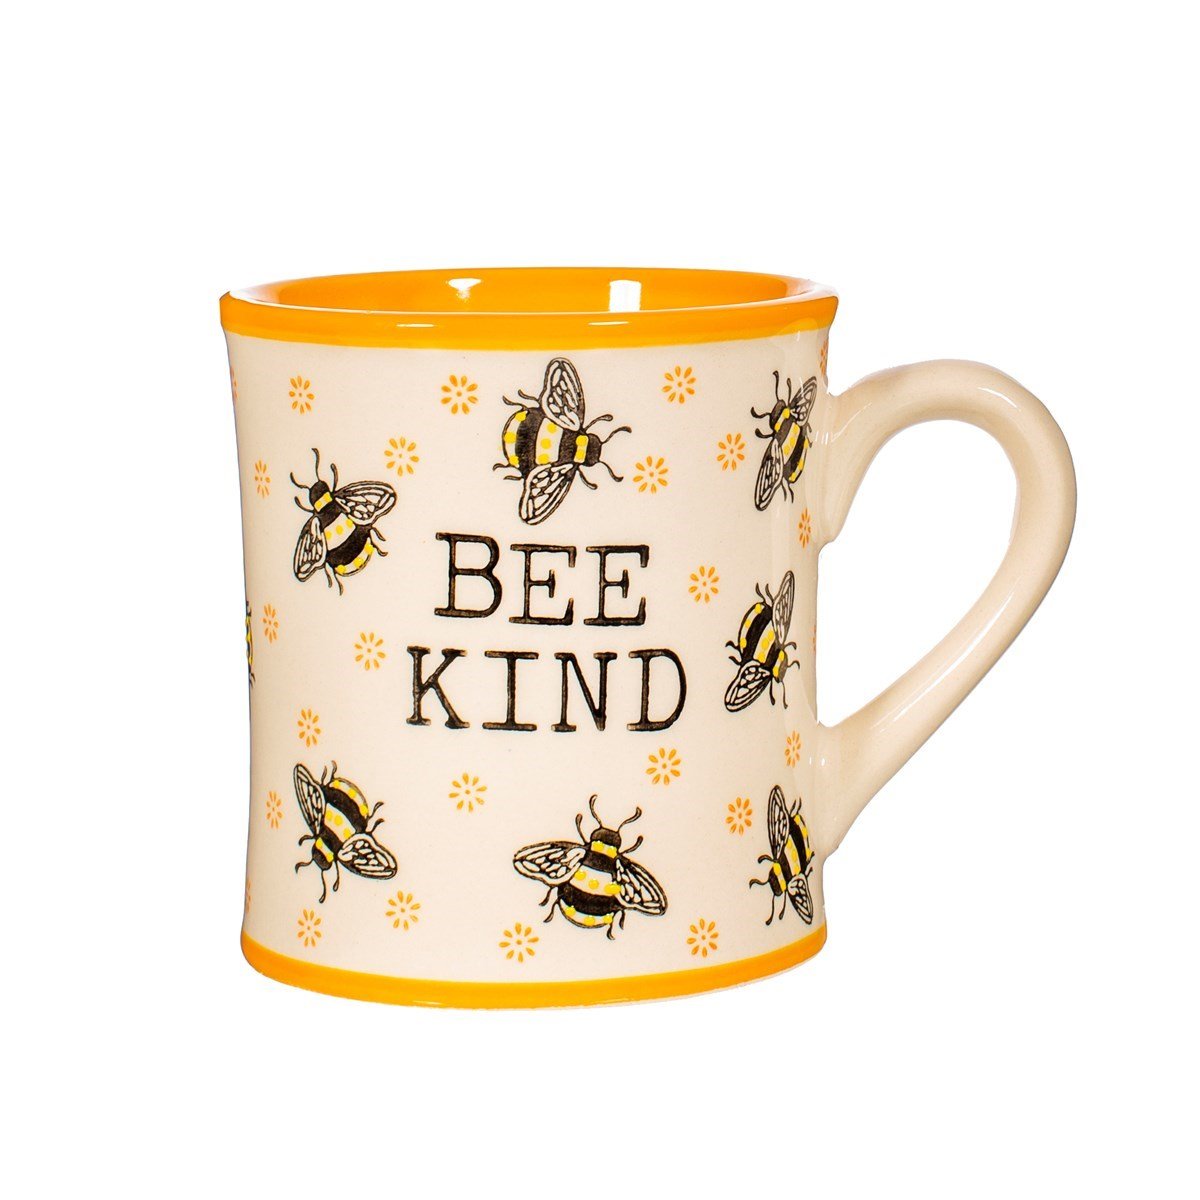 View Bee Kind Mug information